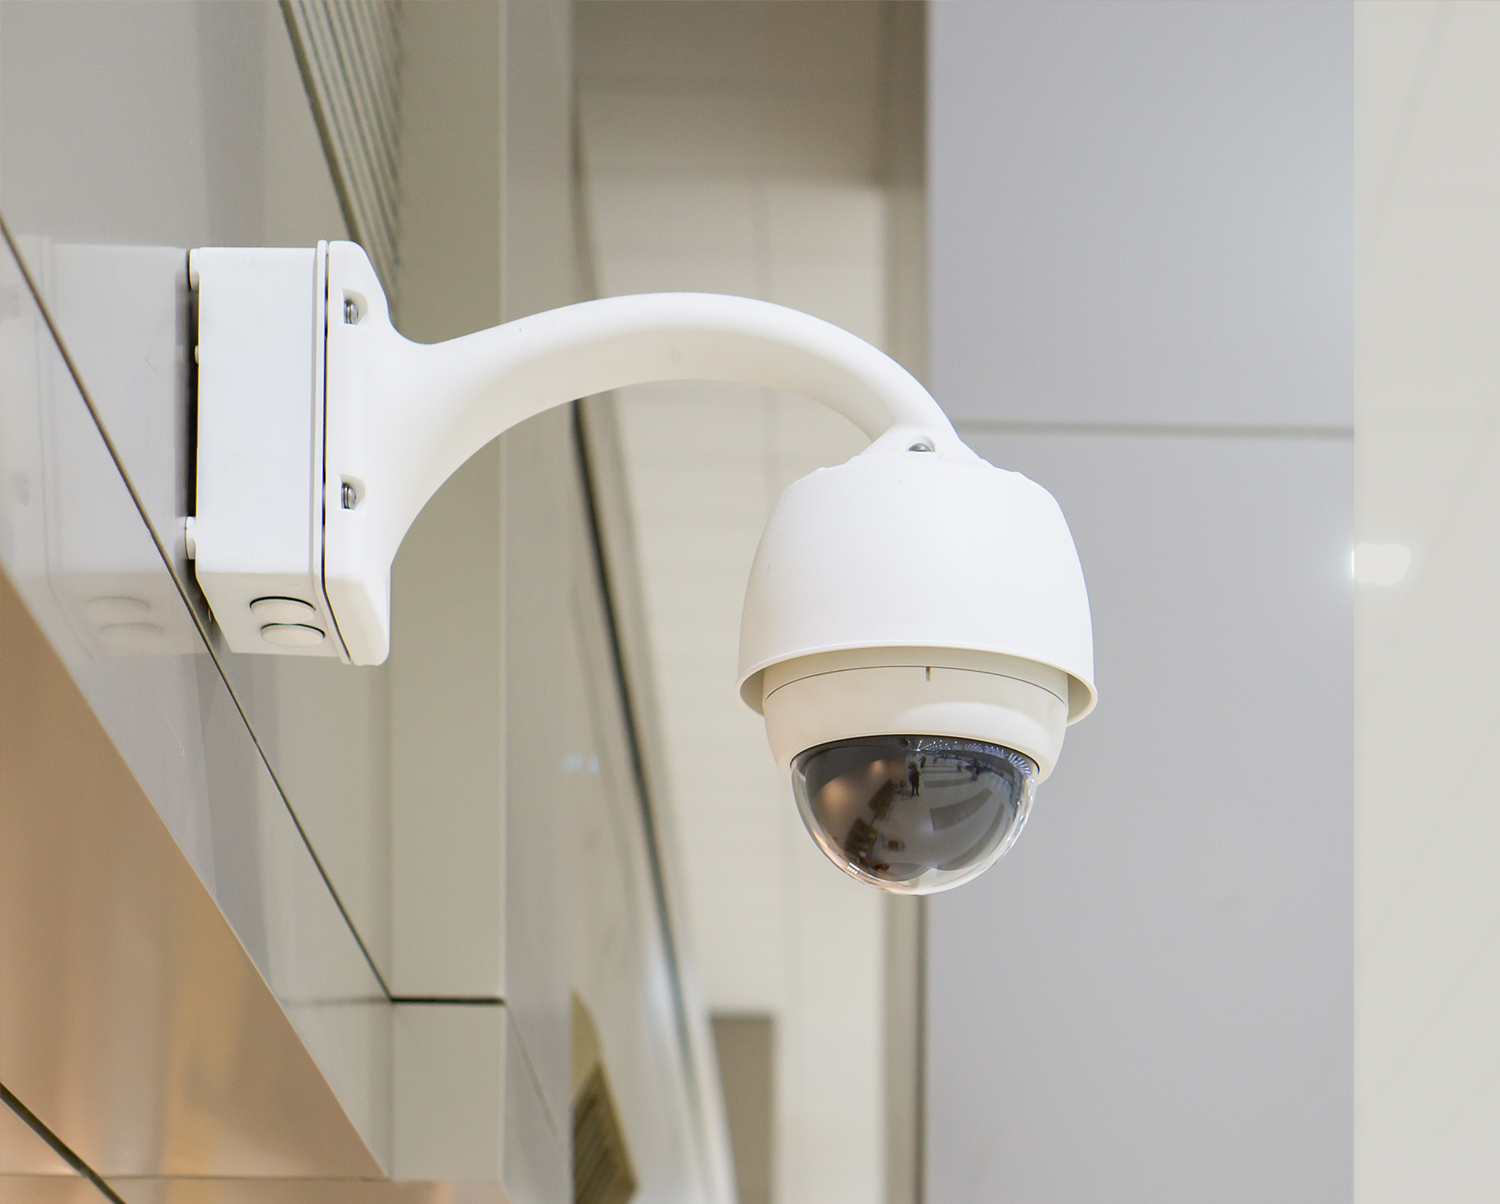 Closeup of a commercial security camera